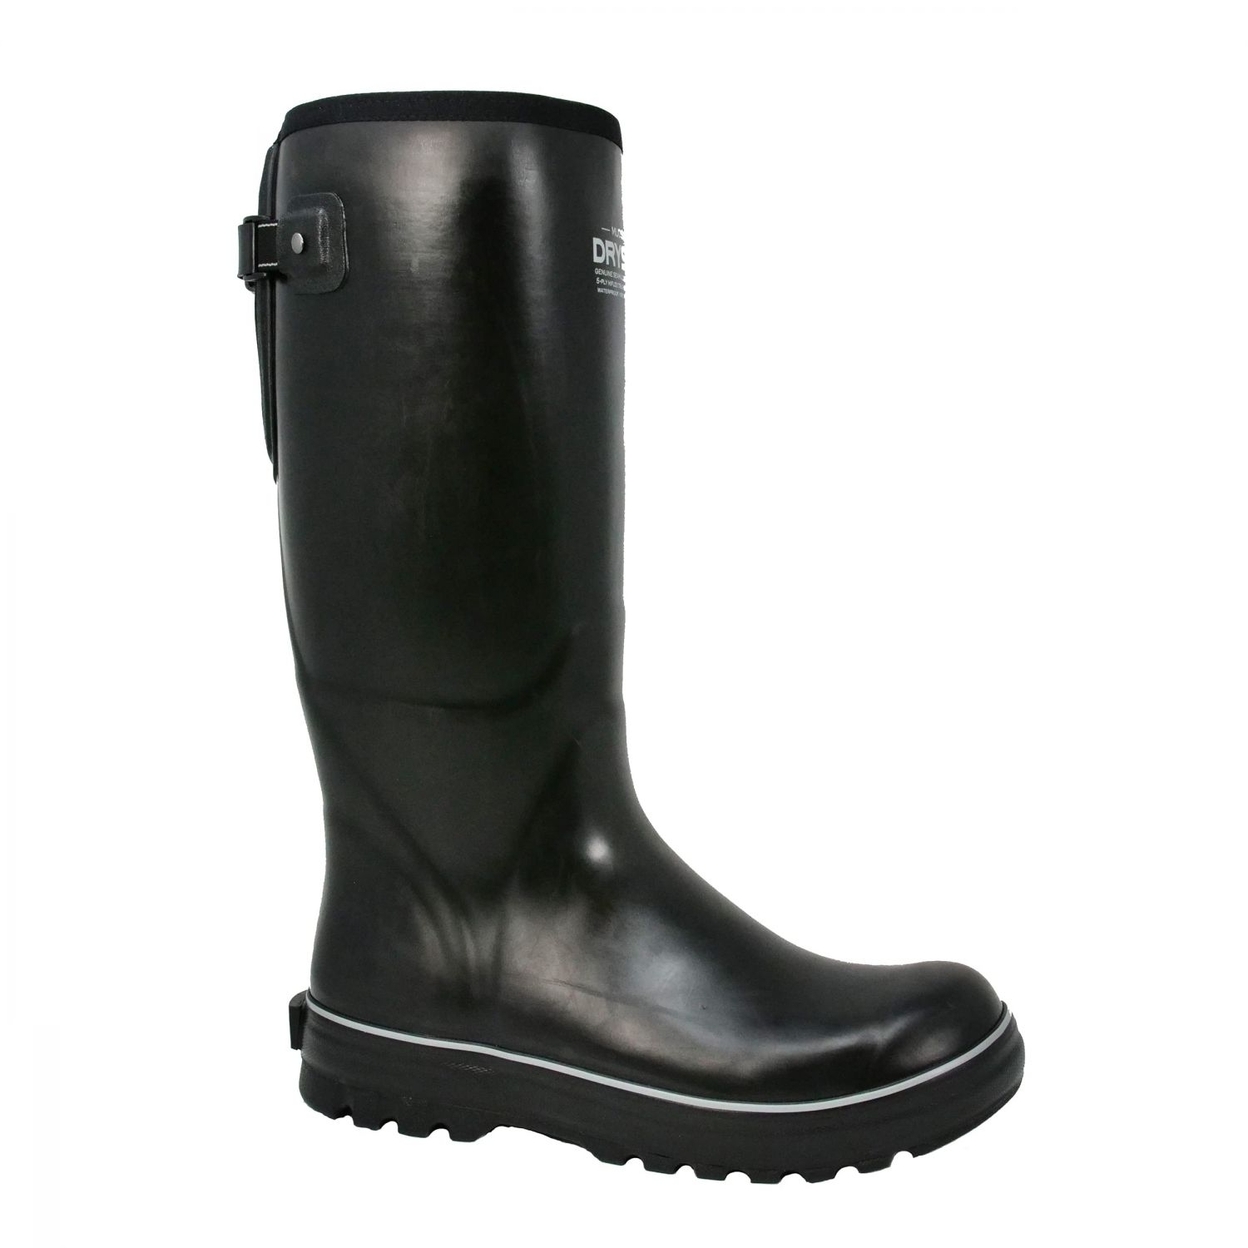 Dryshod Men's Mudslinger Gusset Premium Rubber Farm Boots Black/Grey - MDG-MH-BK ONE SIZE BLACK/GREY - BLACK/GREY, 12